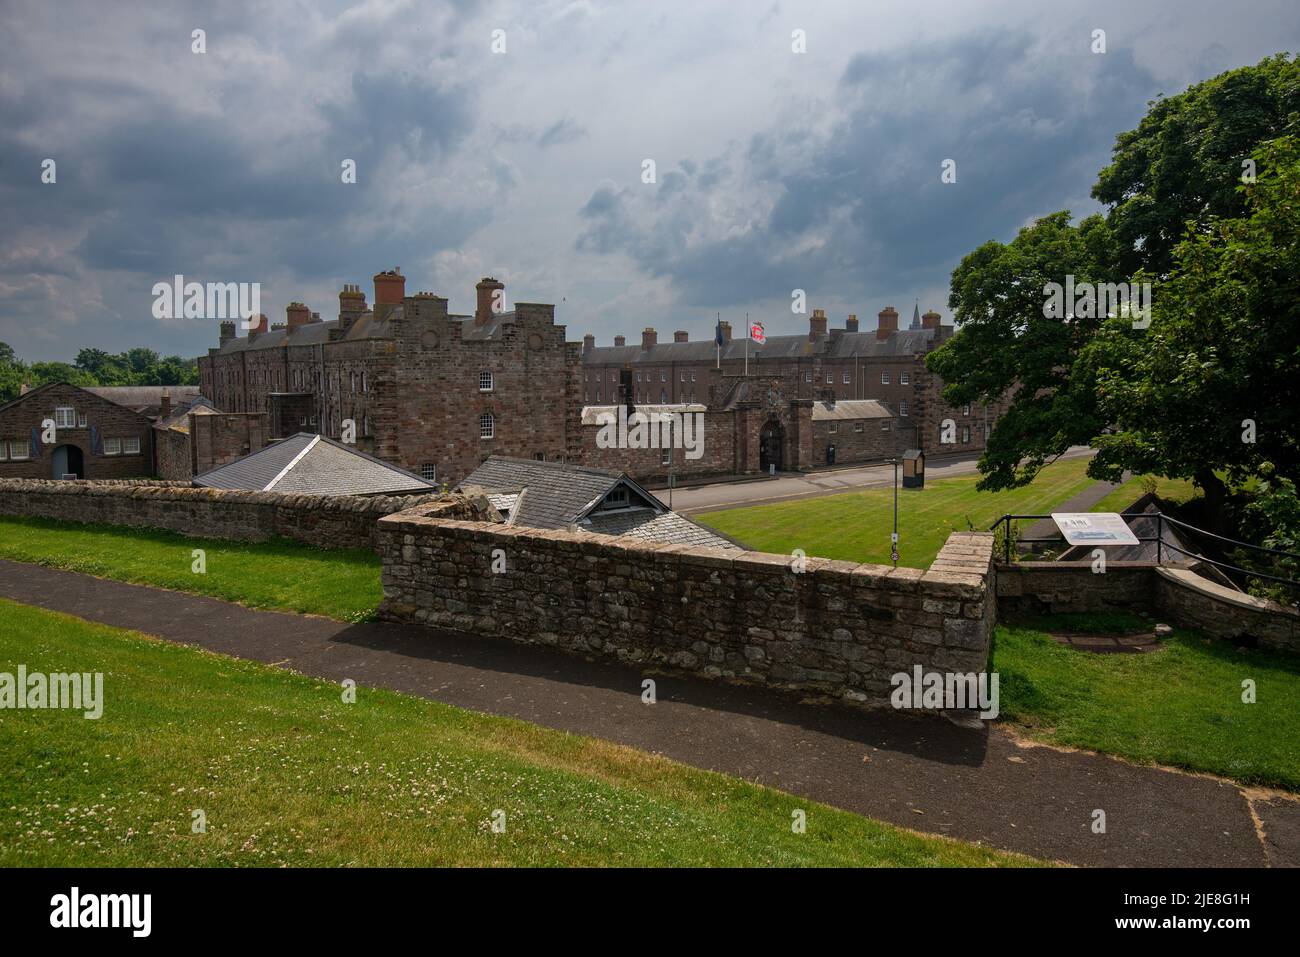 The Barracks, Berwick Upon Tweed, Northumberland, Inglaterra, Reino Unido Foto de stock